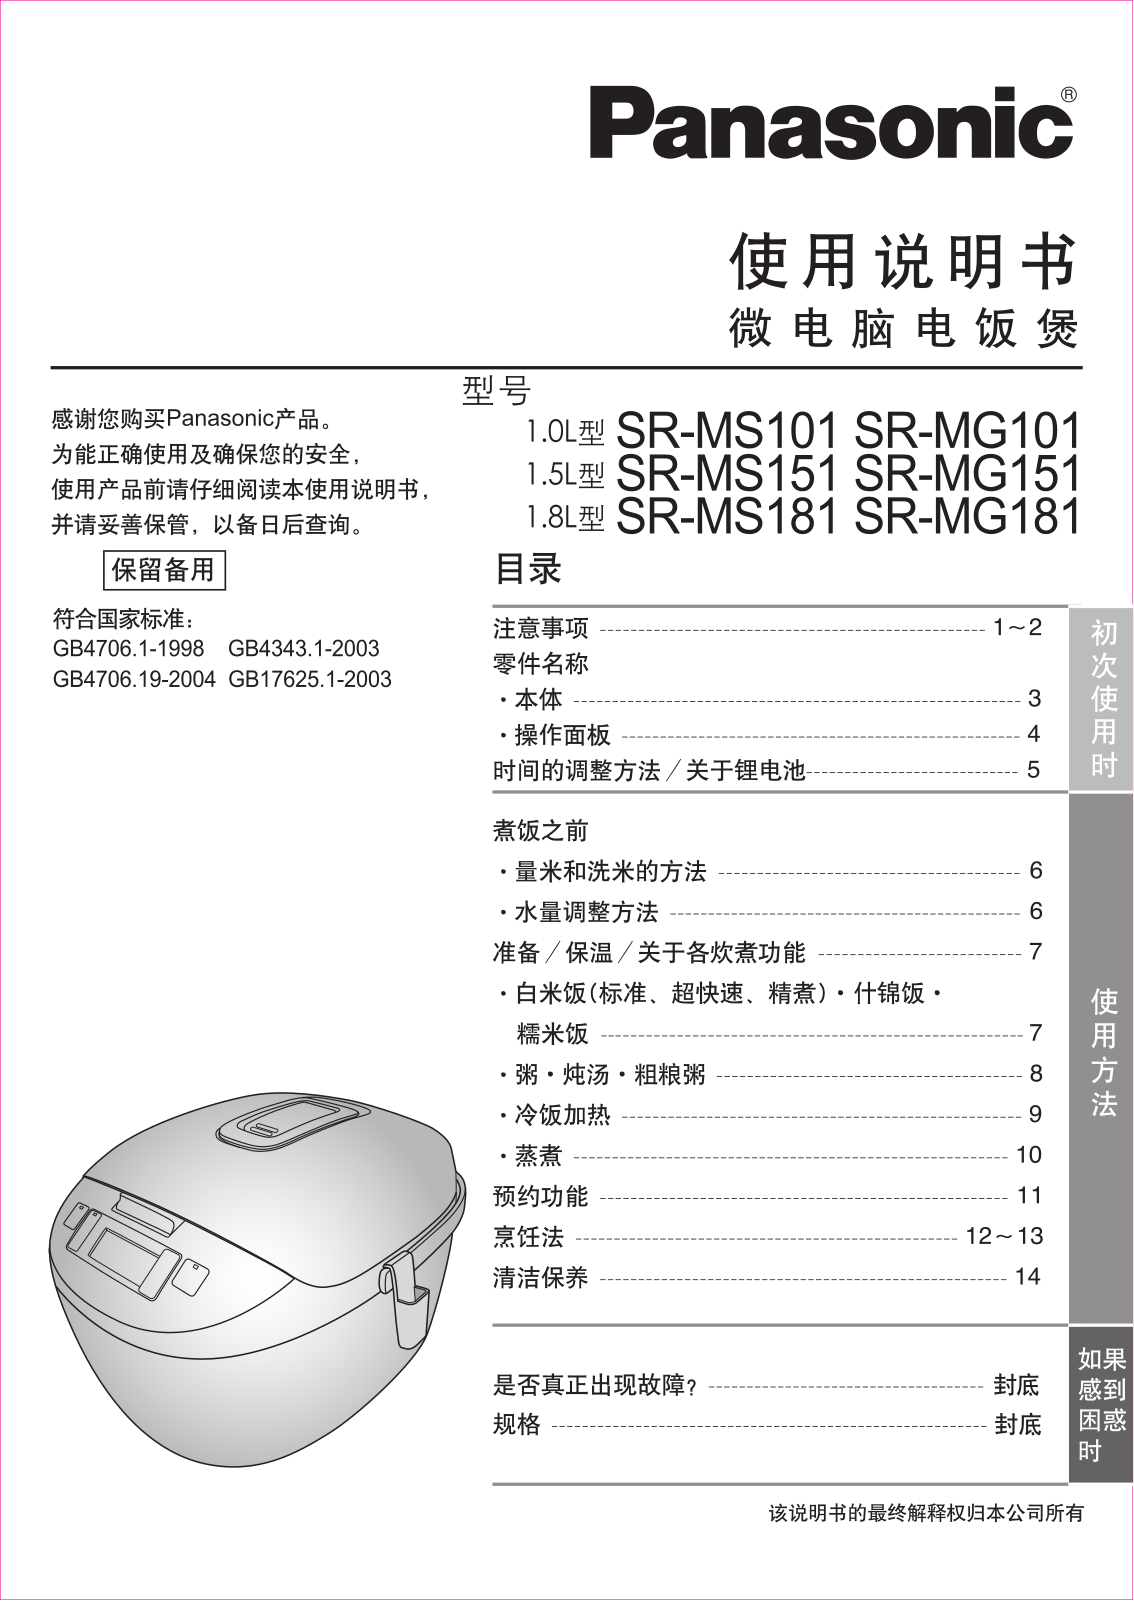 Panasonic SR-MS101, SR-MS151 User Manual